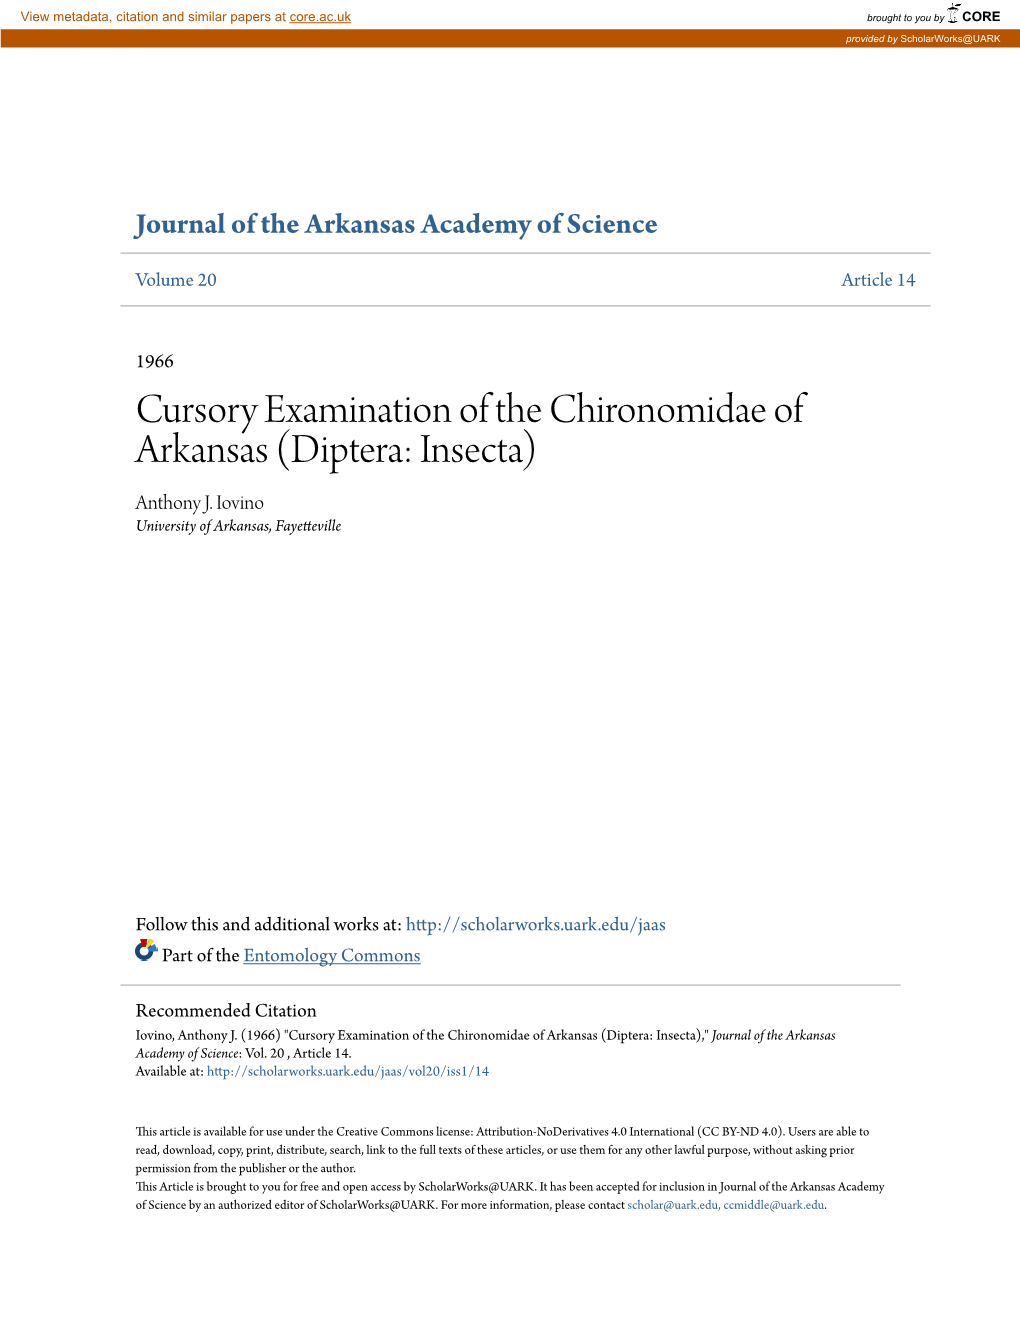 Cursory Examination of the Chironomidae of Arkansas (Diptera: Insecta) Anthony J